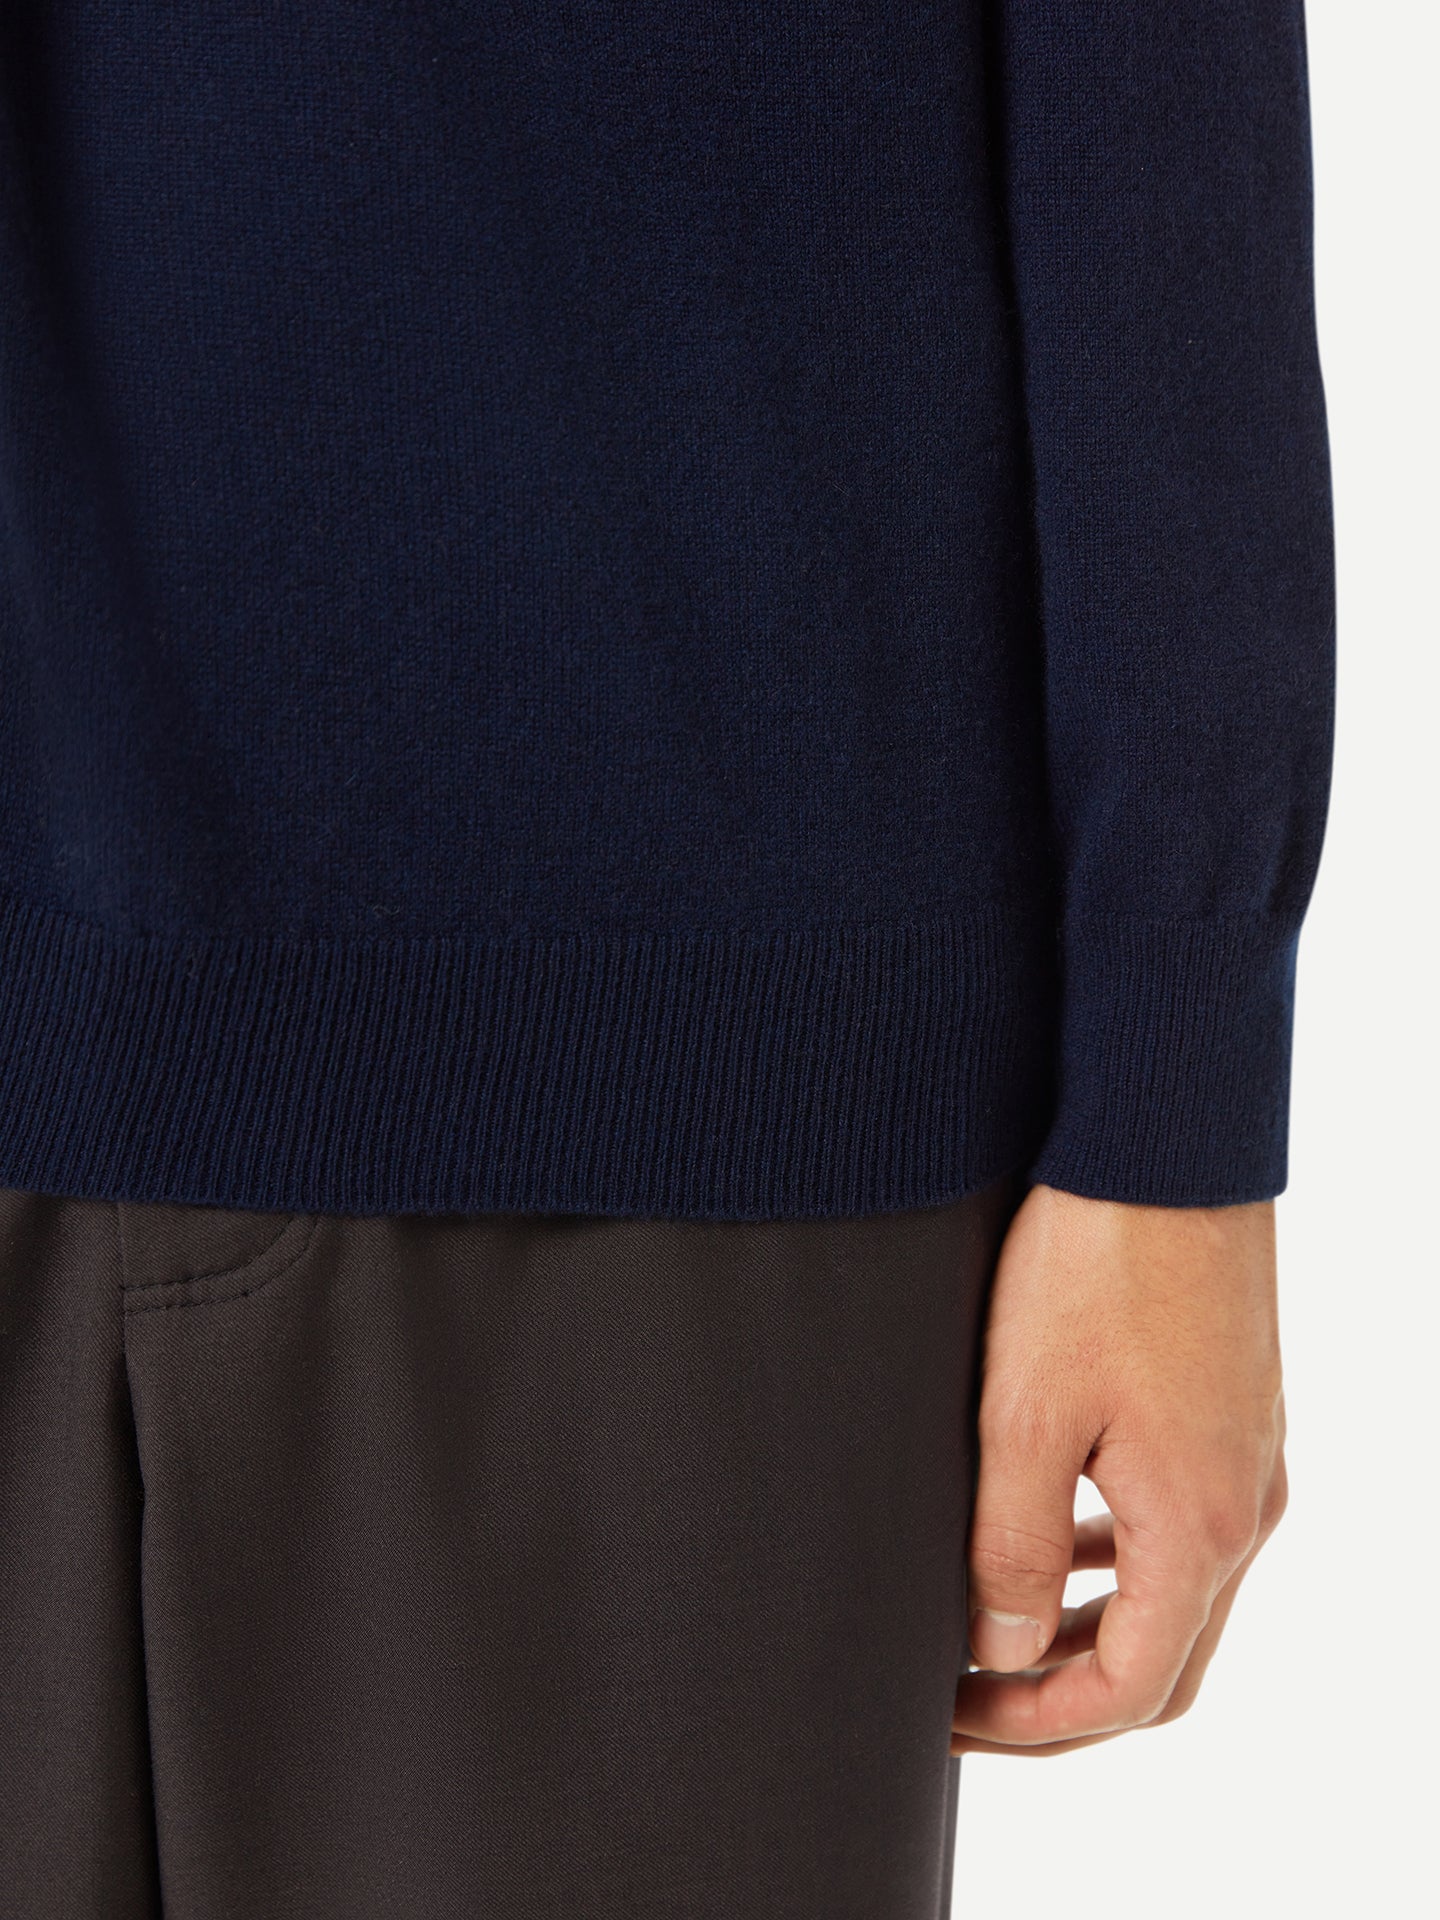 Men's Cashmere Polo Sweater Navy - Gobi Cashmere